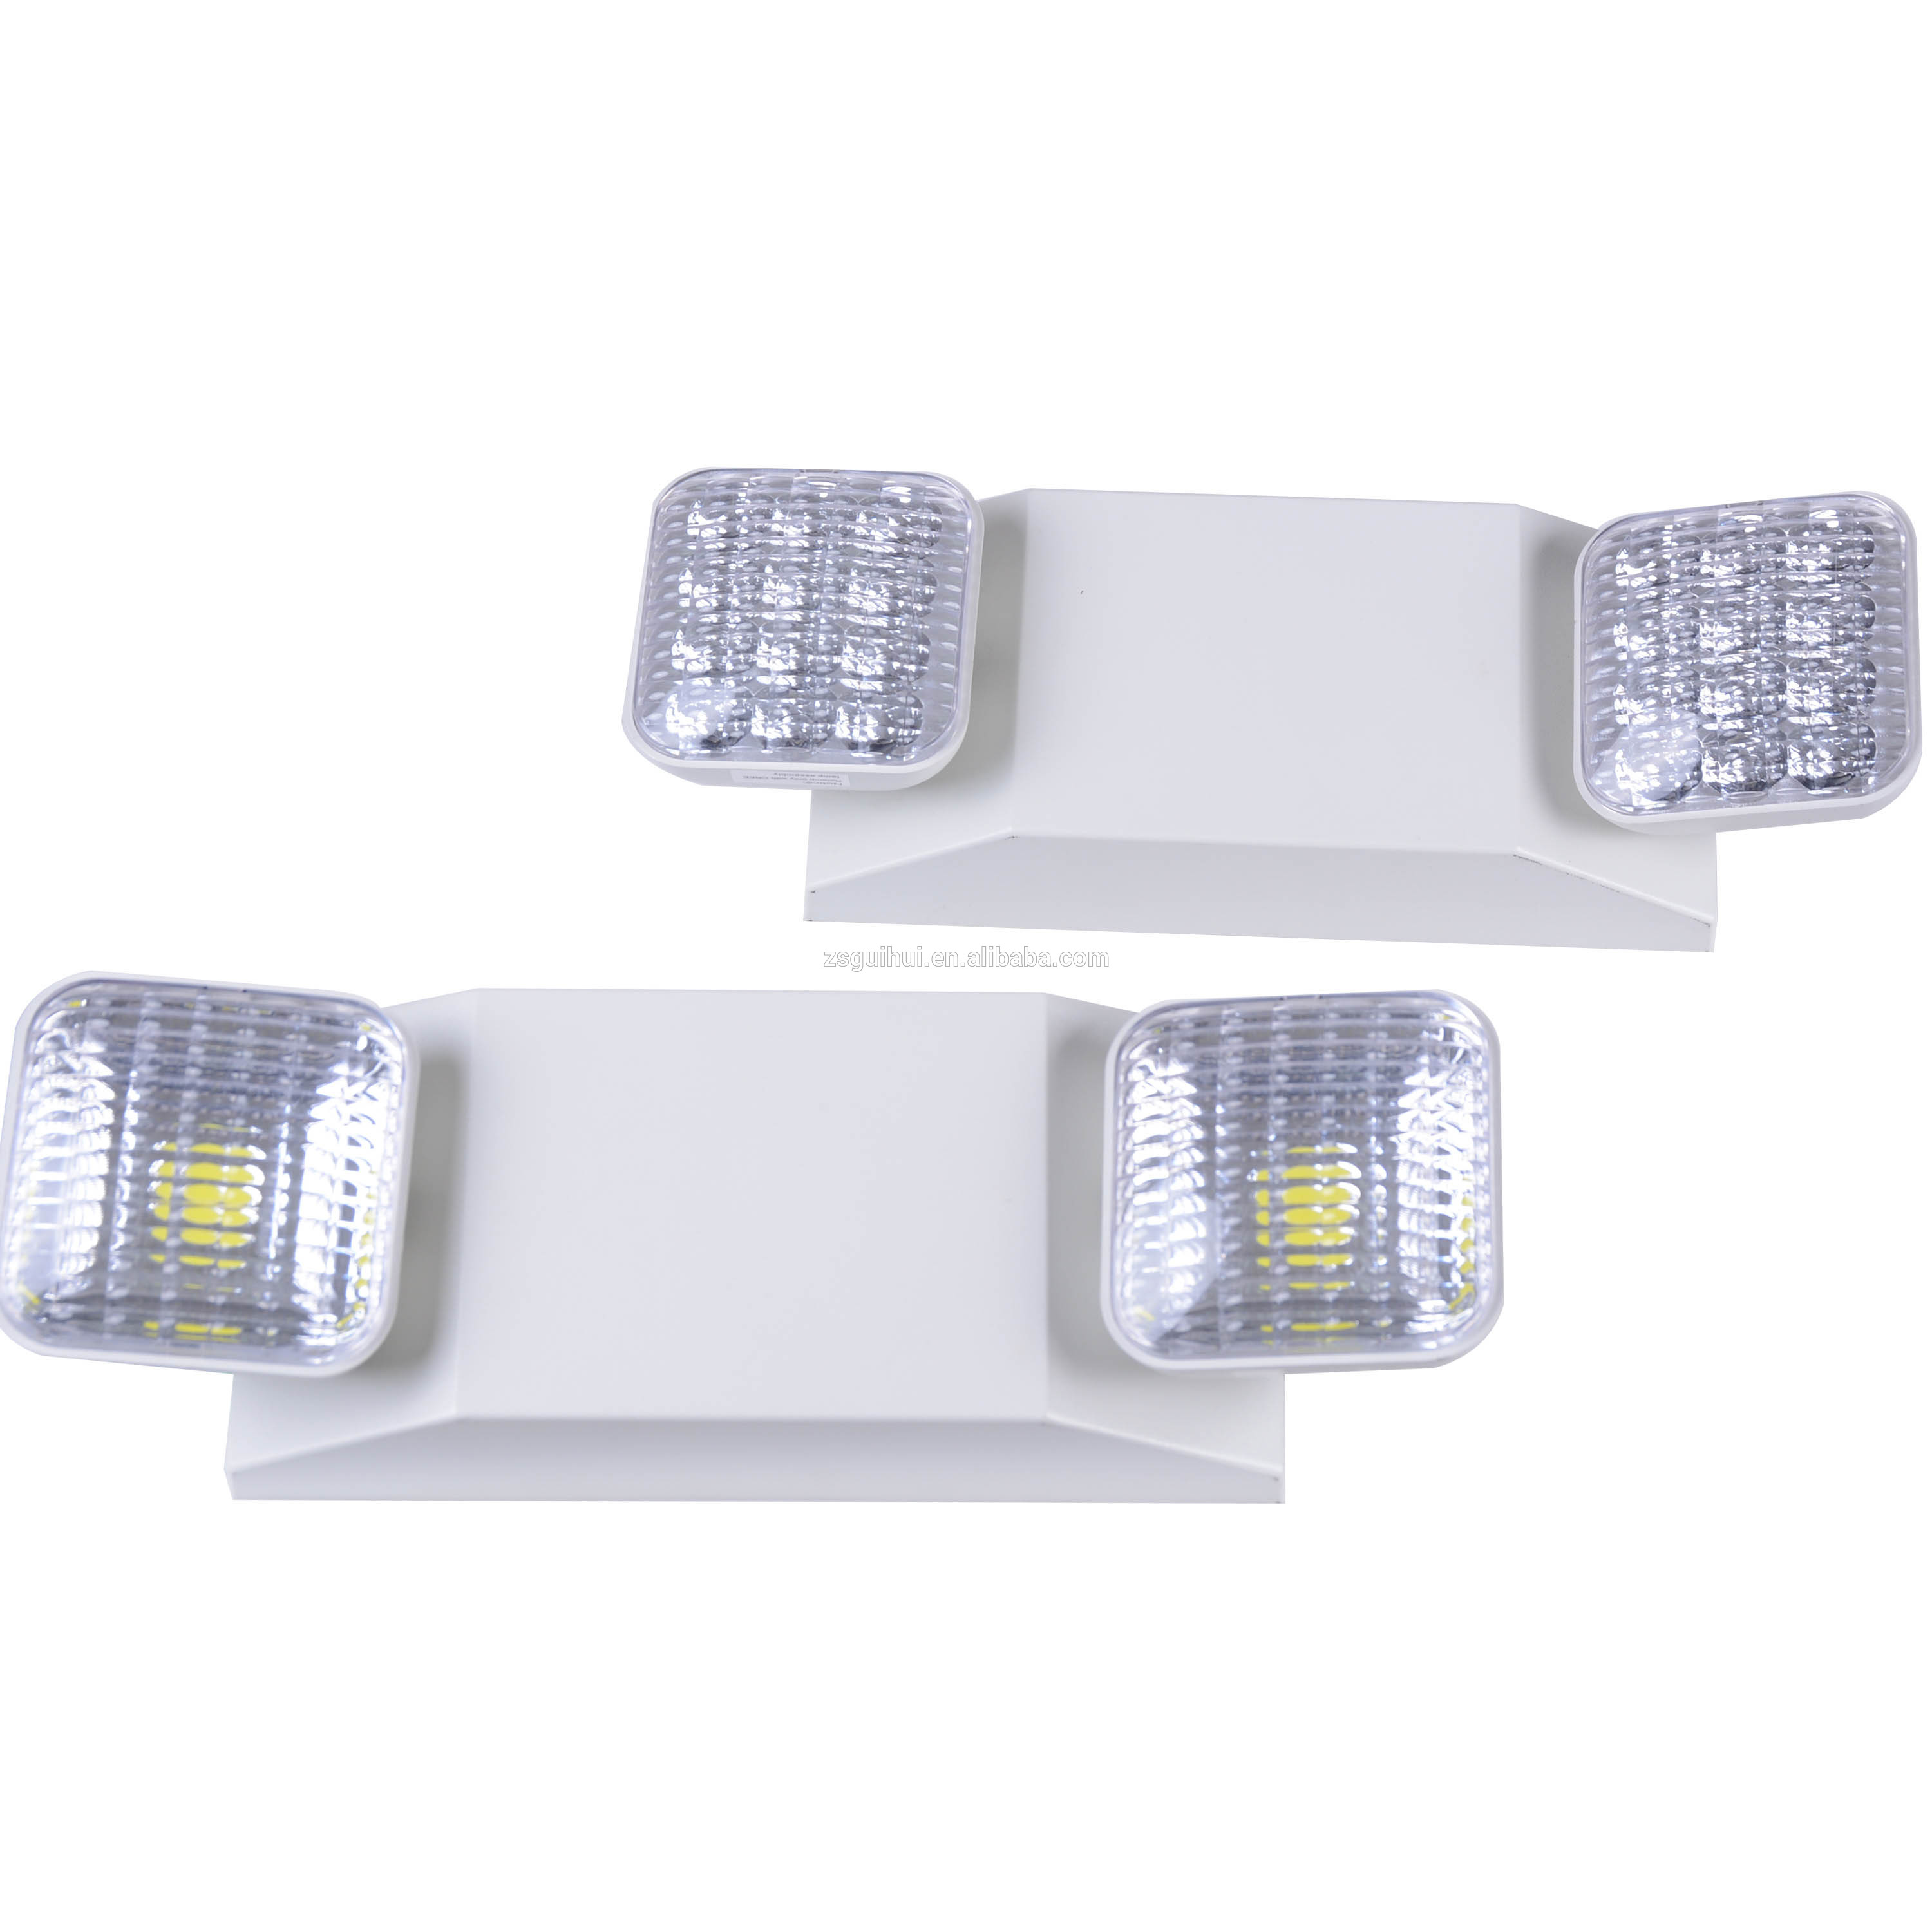 LFI Lights 2 heads North American standard Hardwired LED Emergency Light Standard